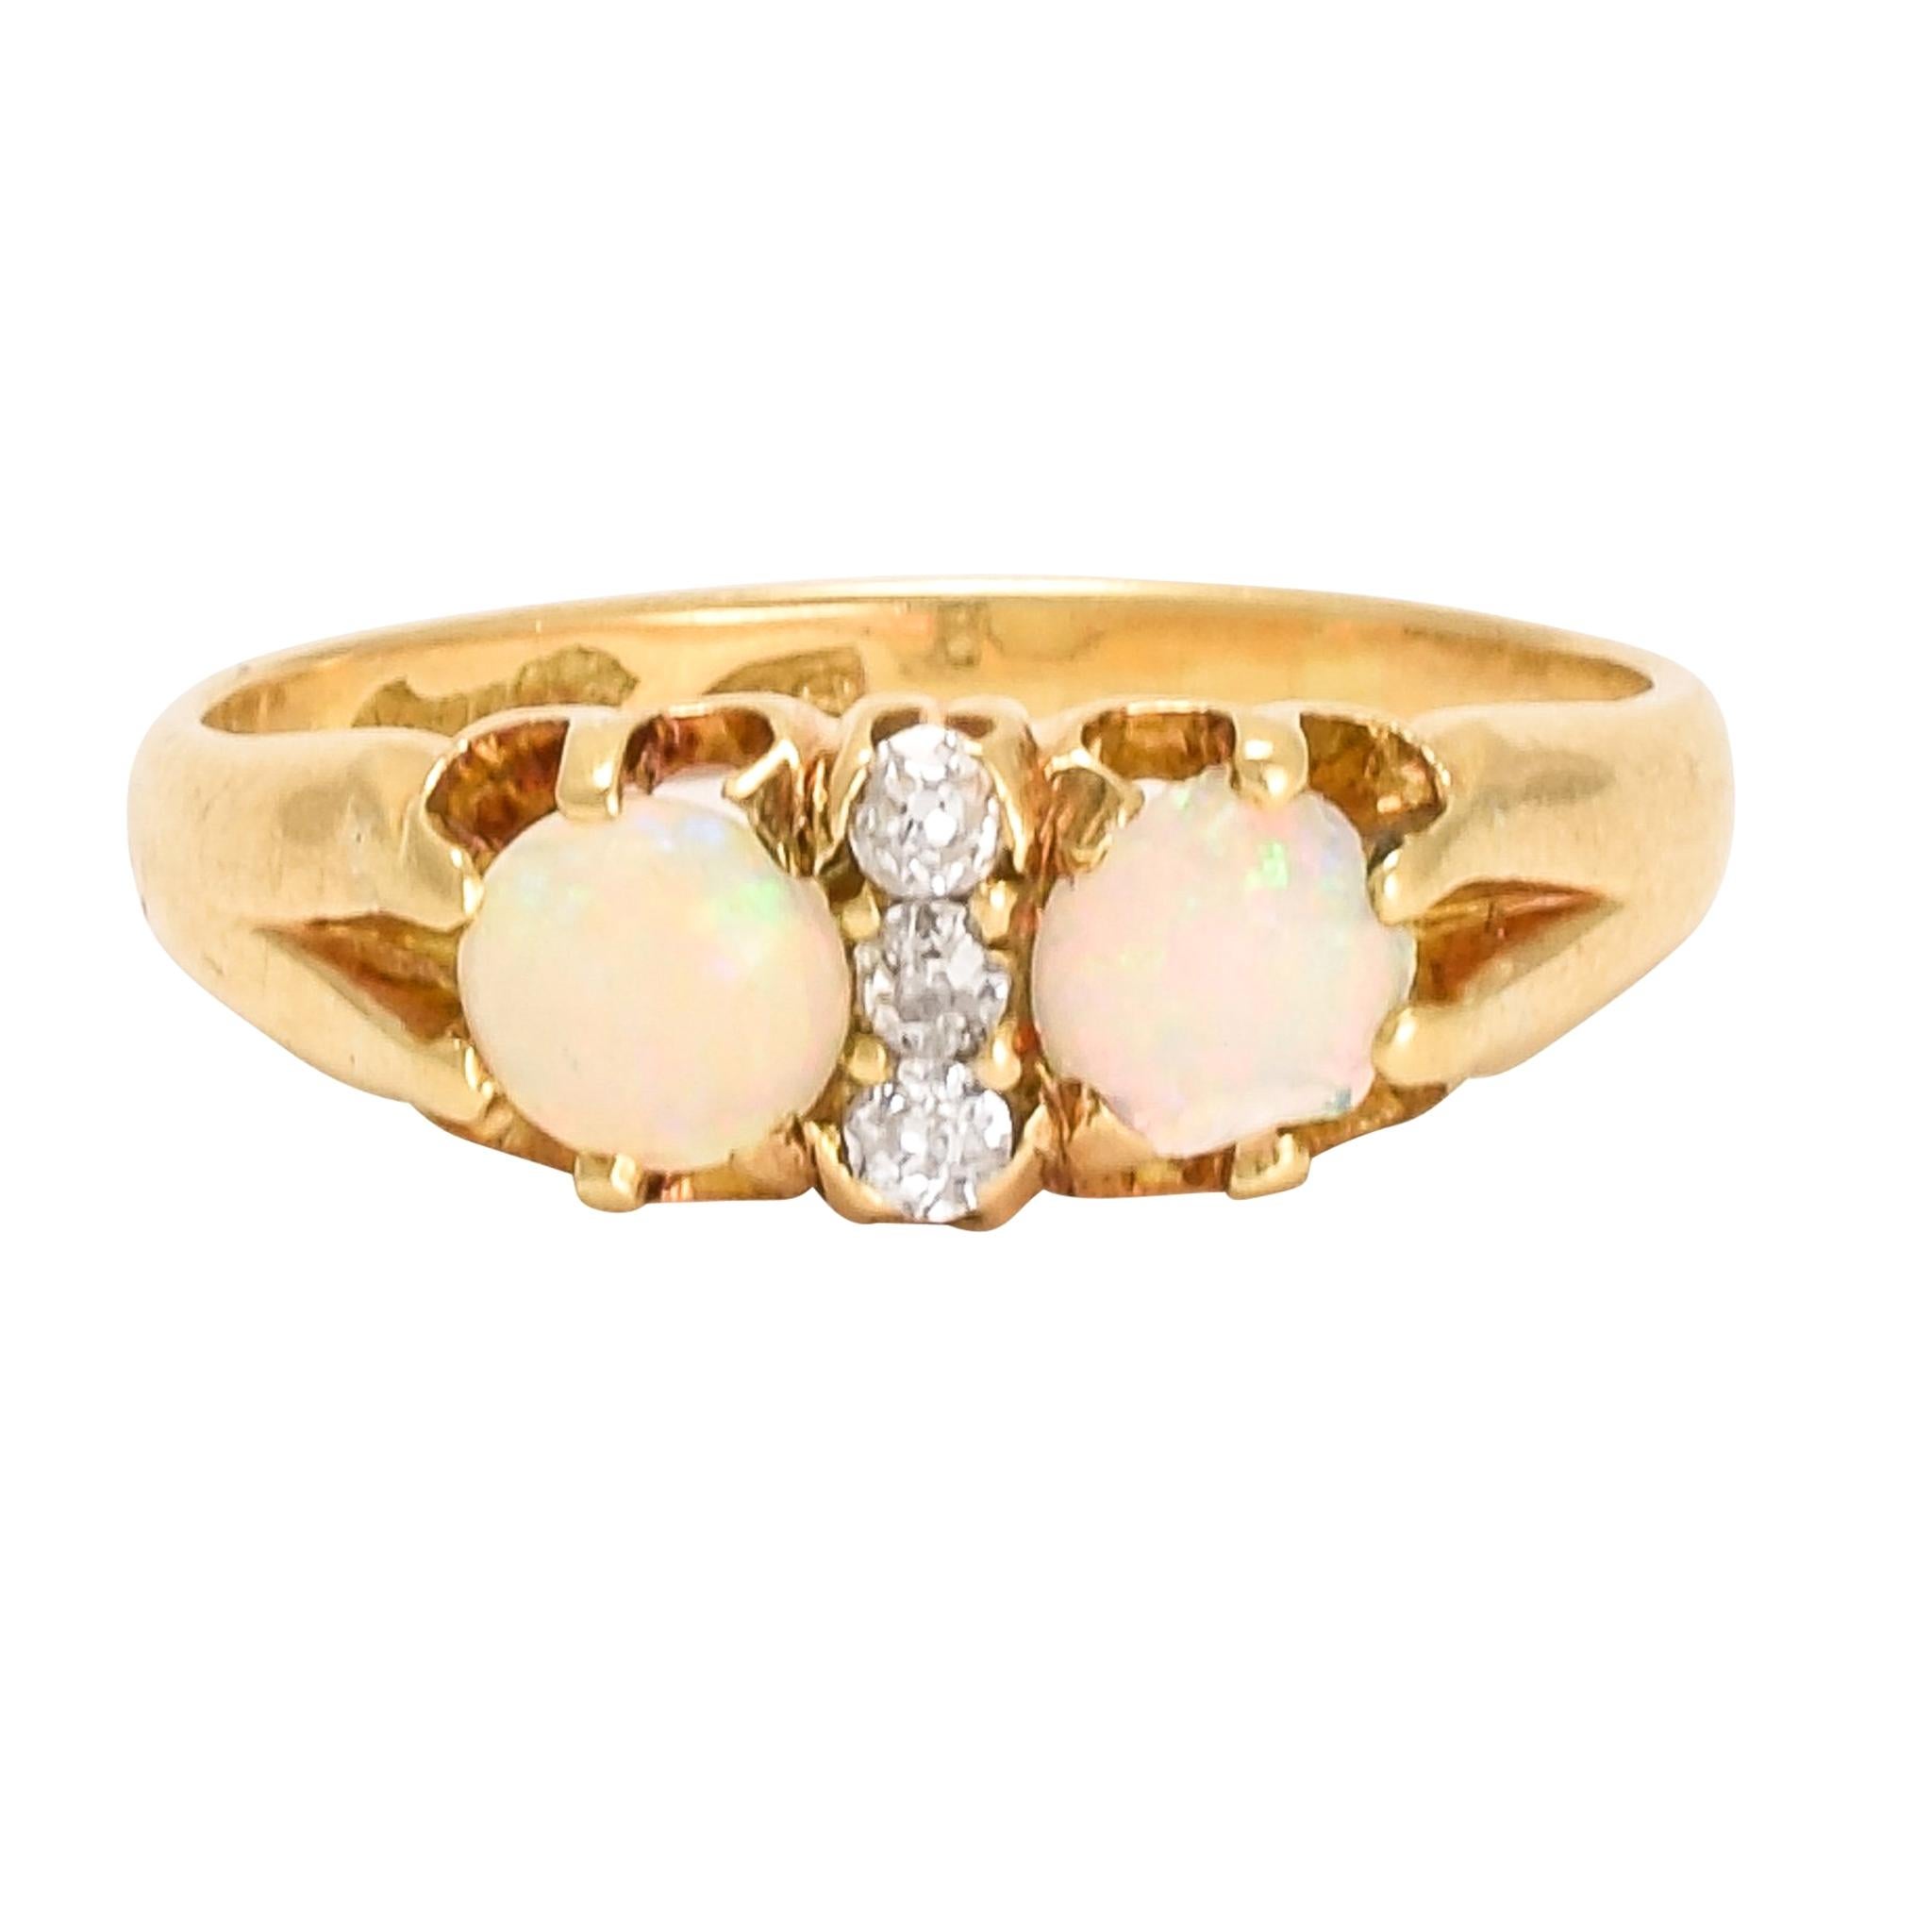 Late Victorian Opal Diamond Ring